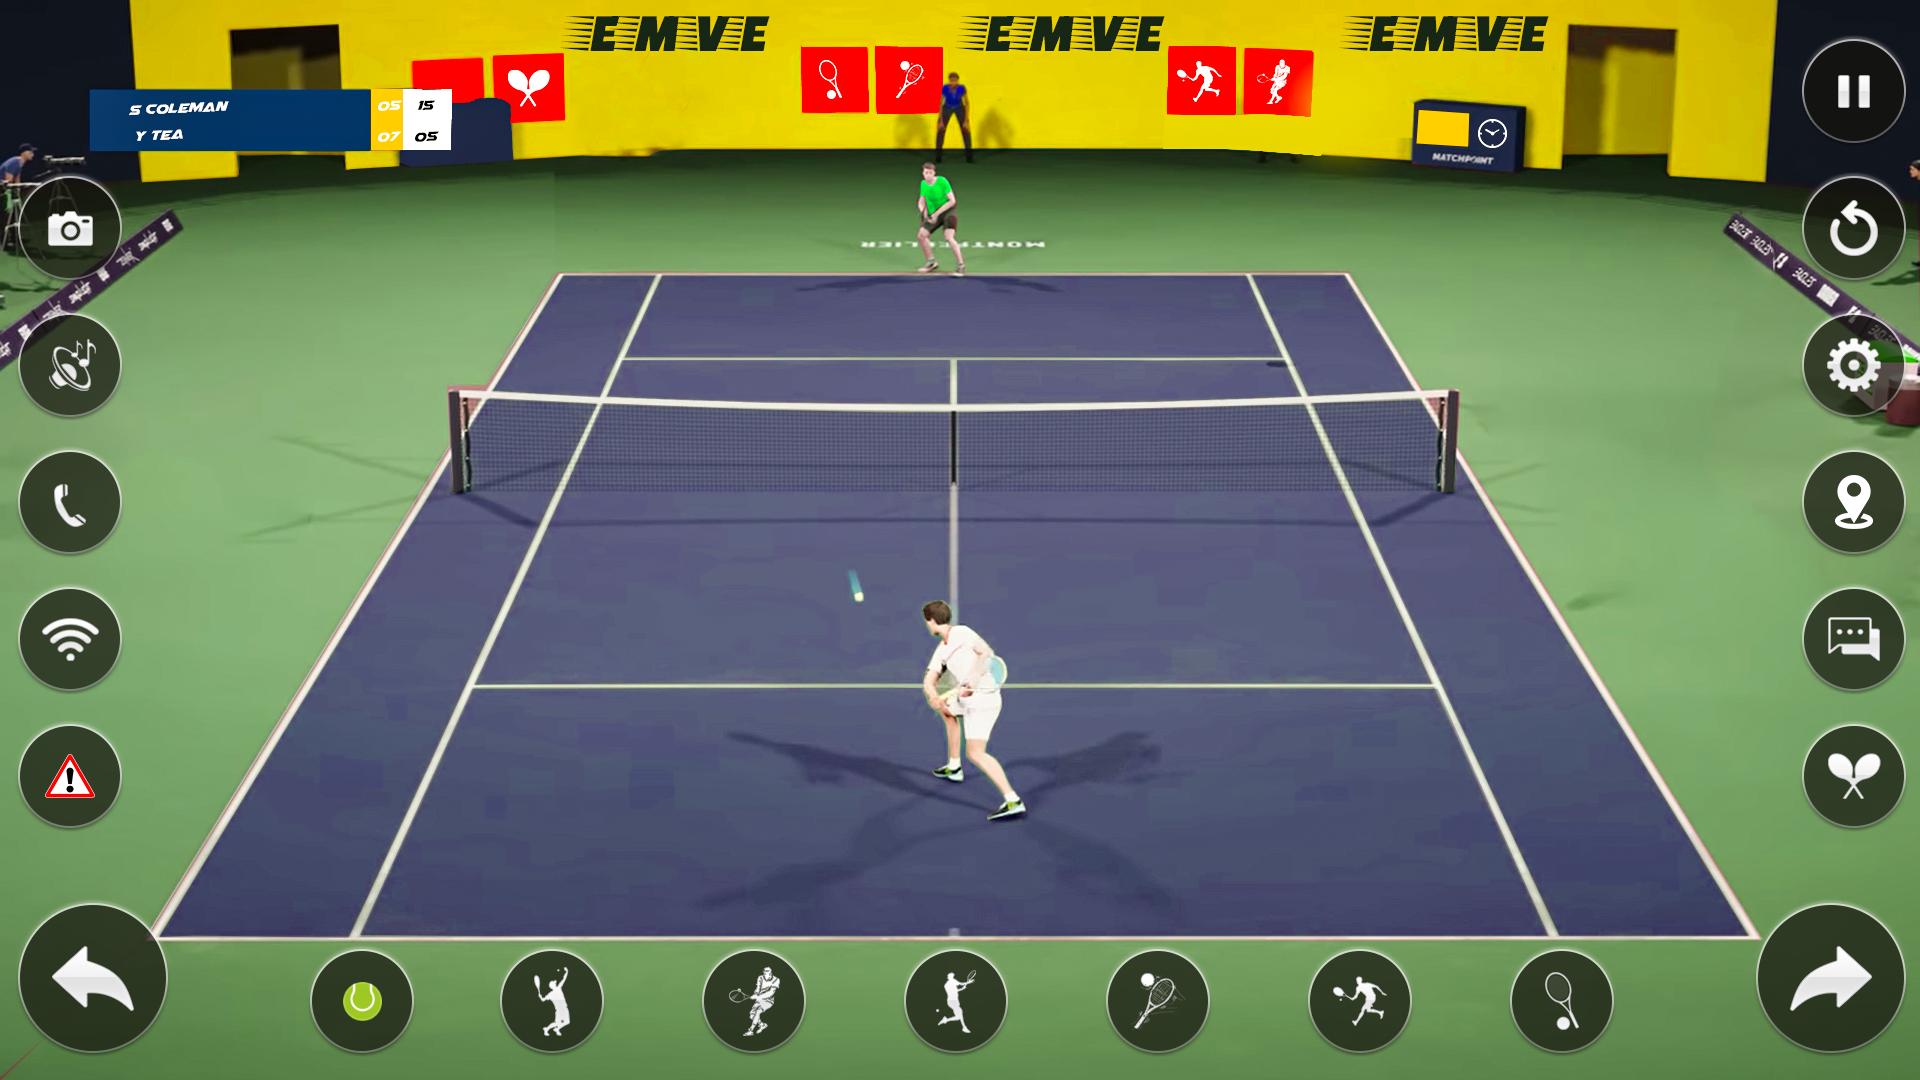 Tennis for two игра. 3d теннис. Хумо Арена теннис. Парная игра в теннис когда противником является стенка. Партия игры в теннисе